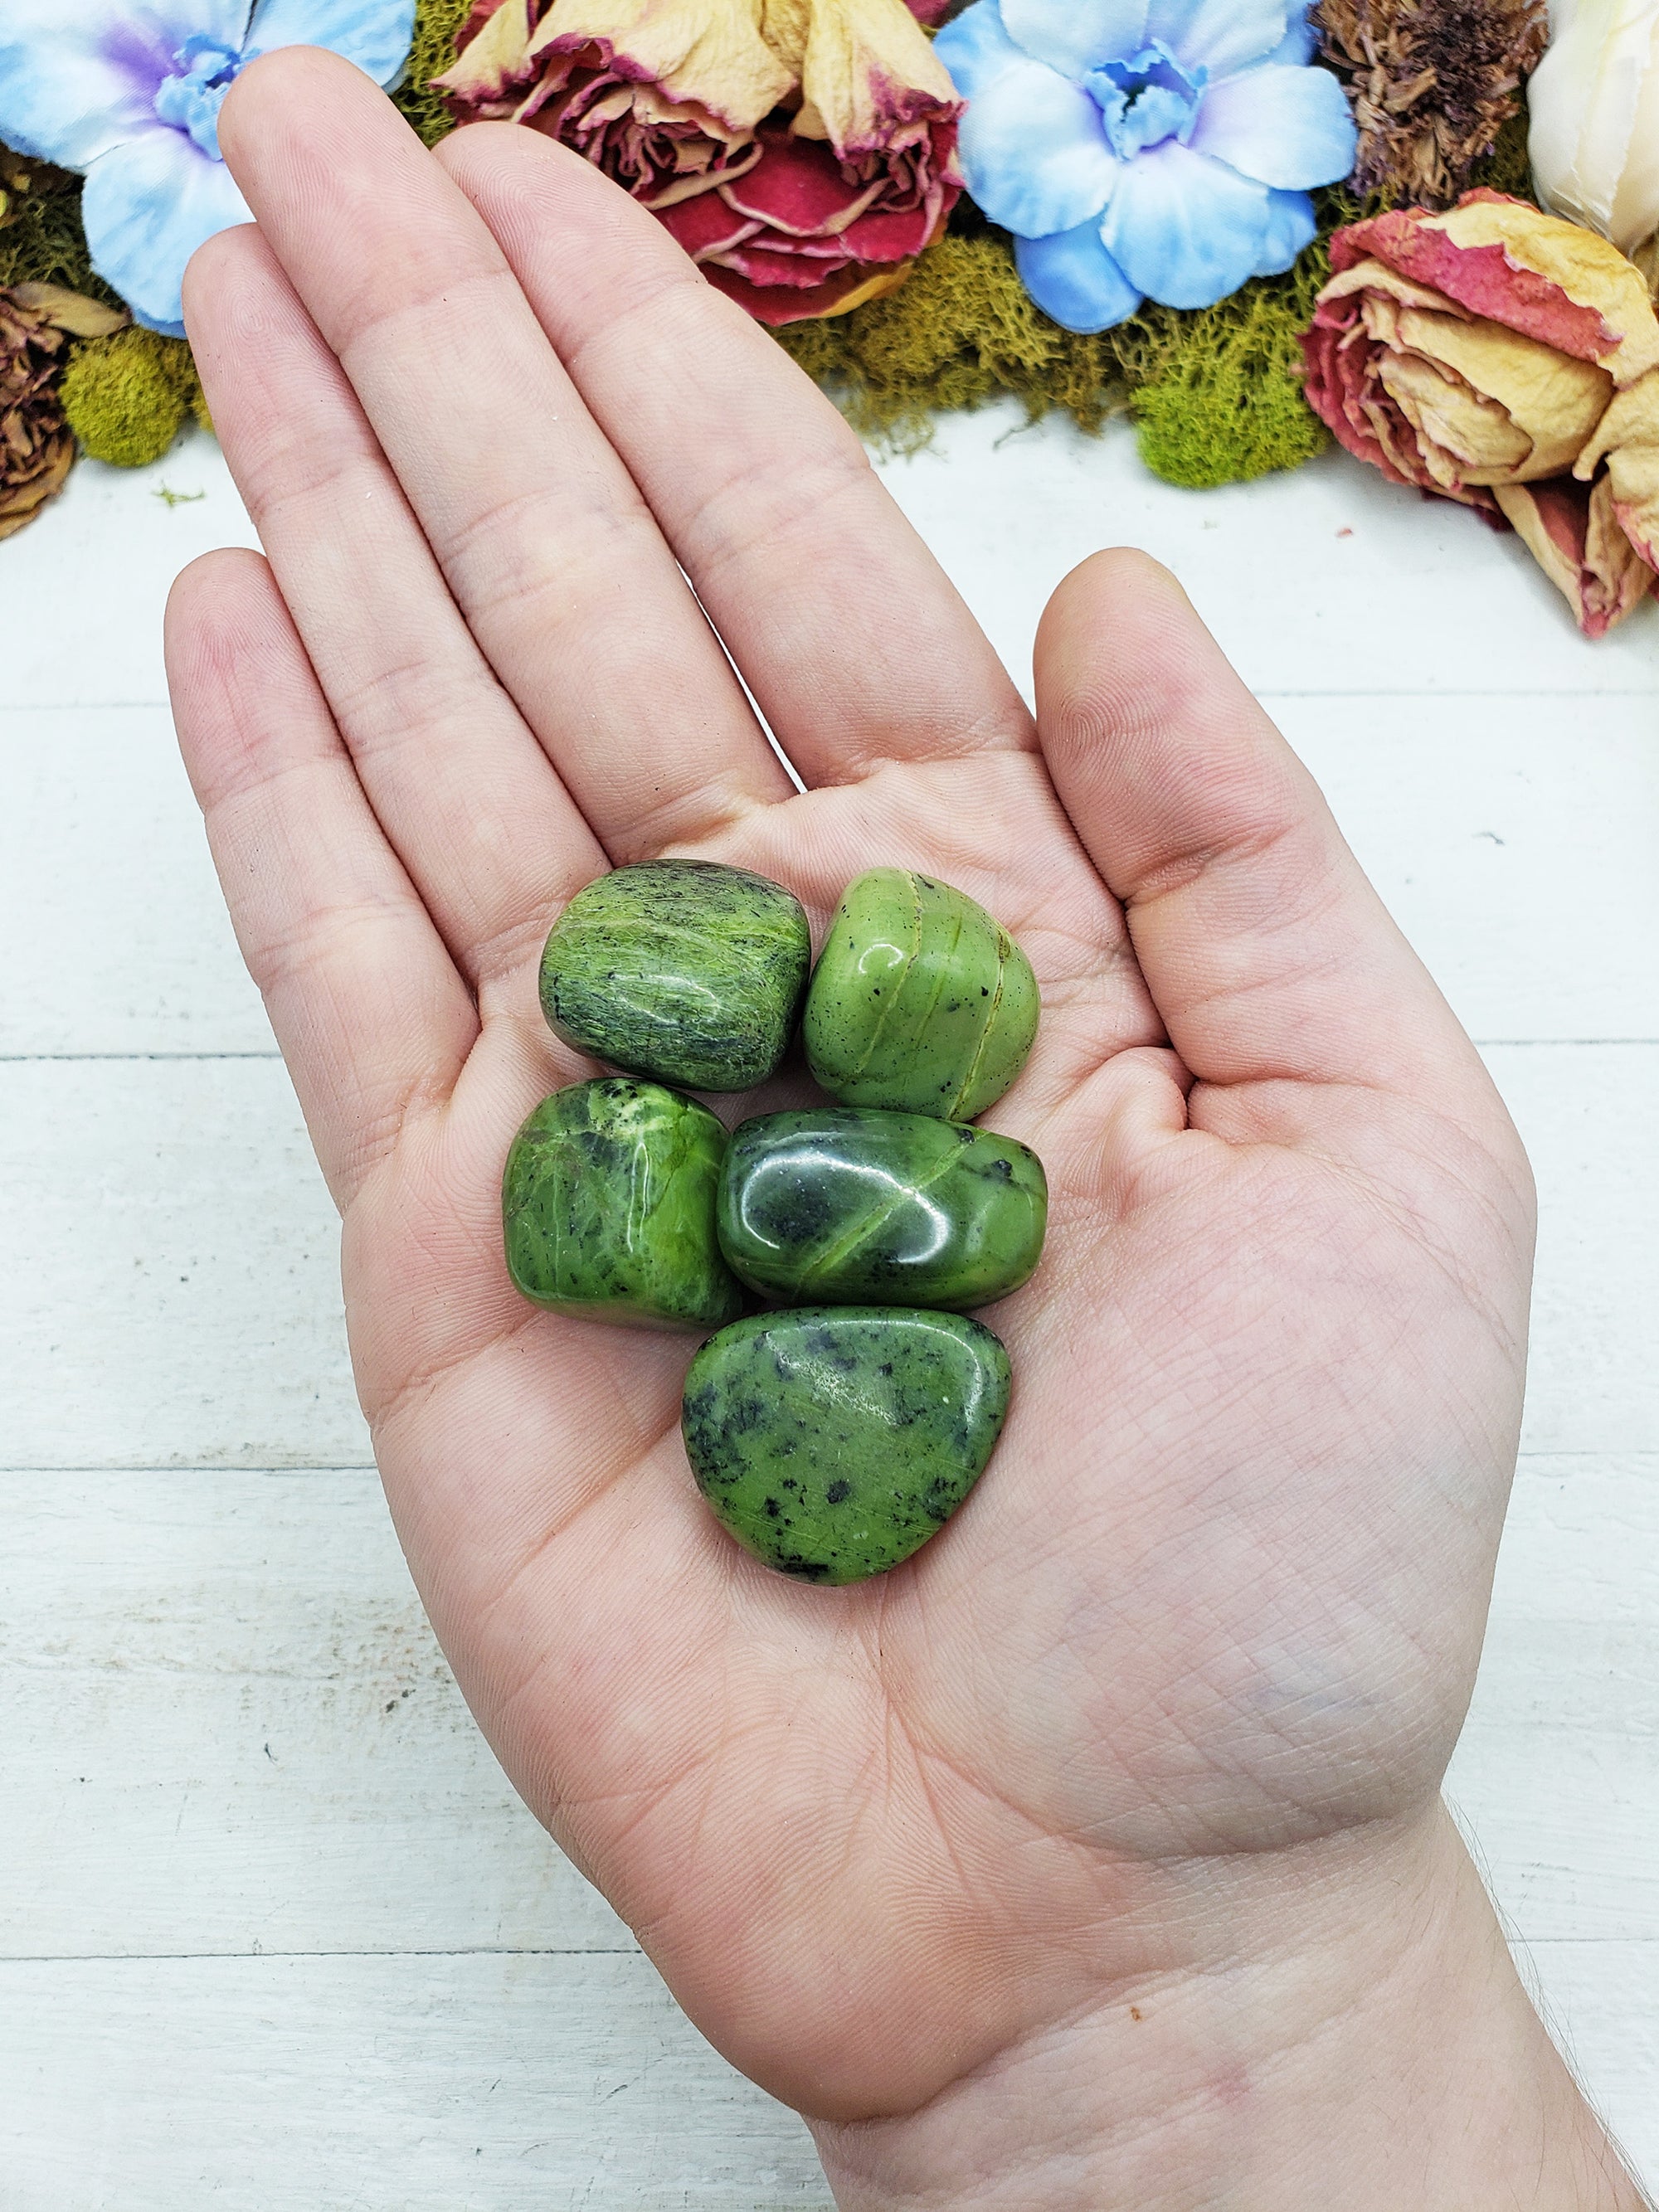 nephrite jade stones in hand